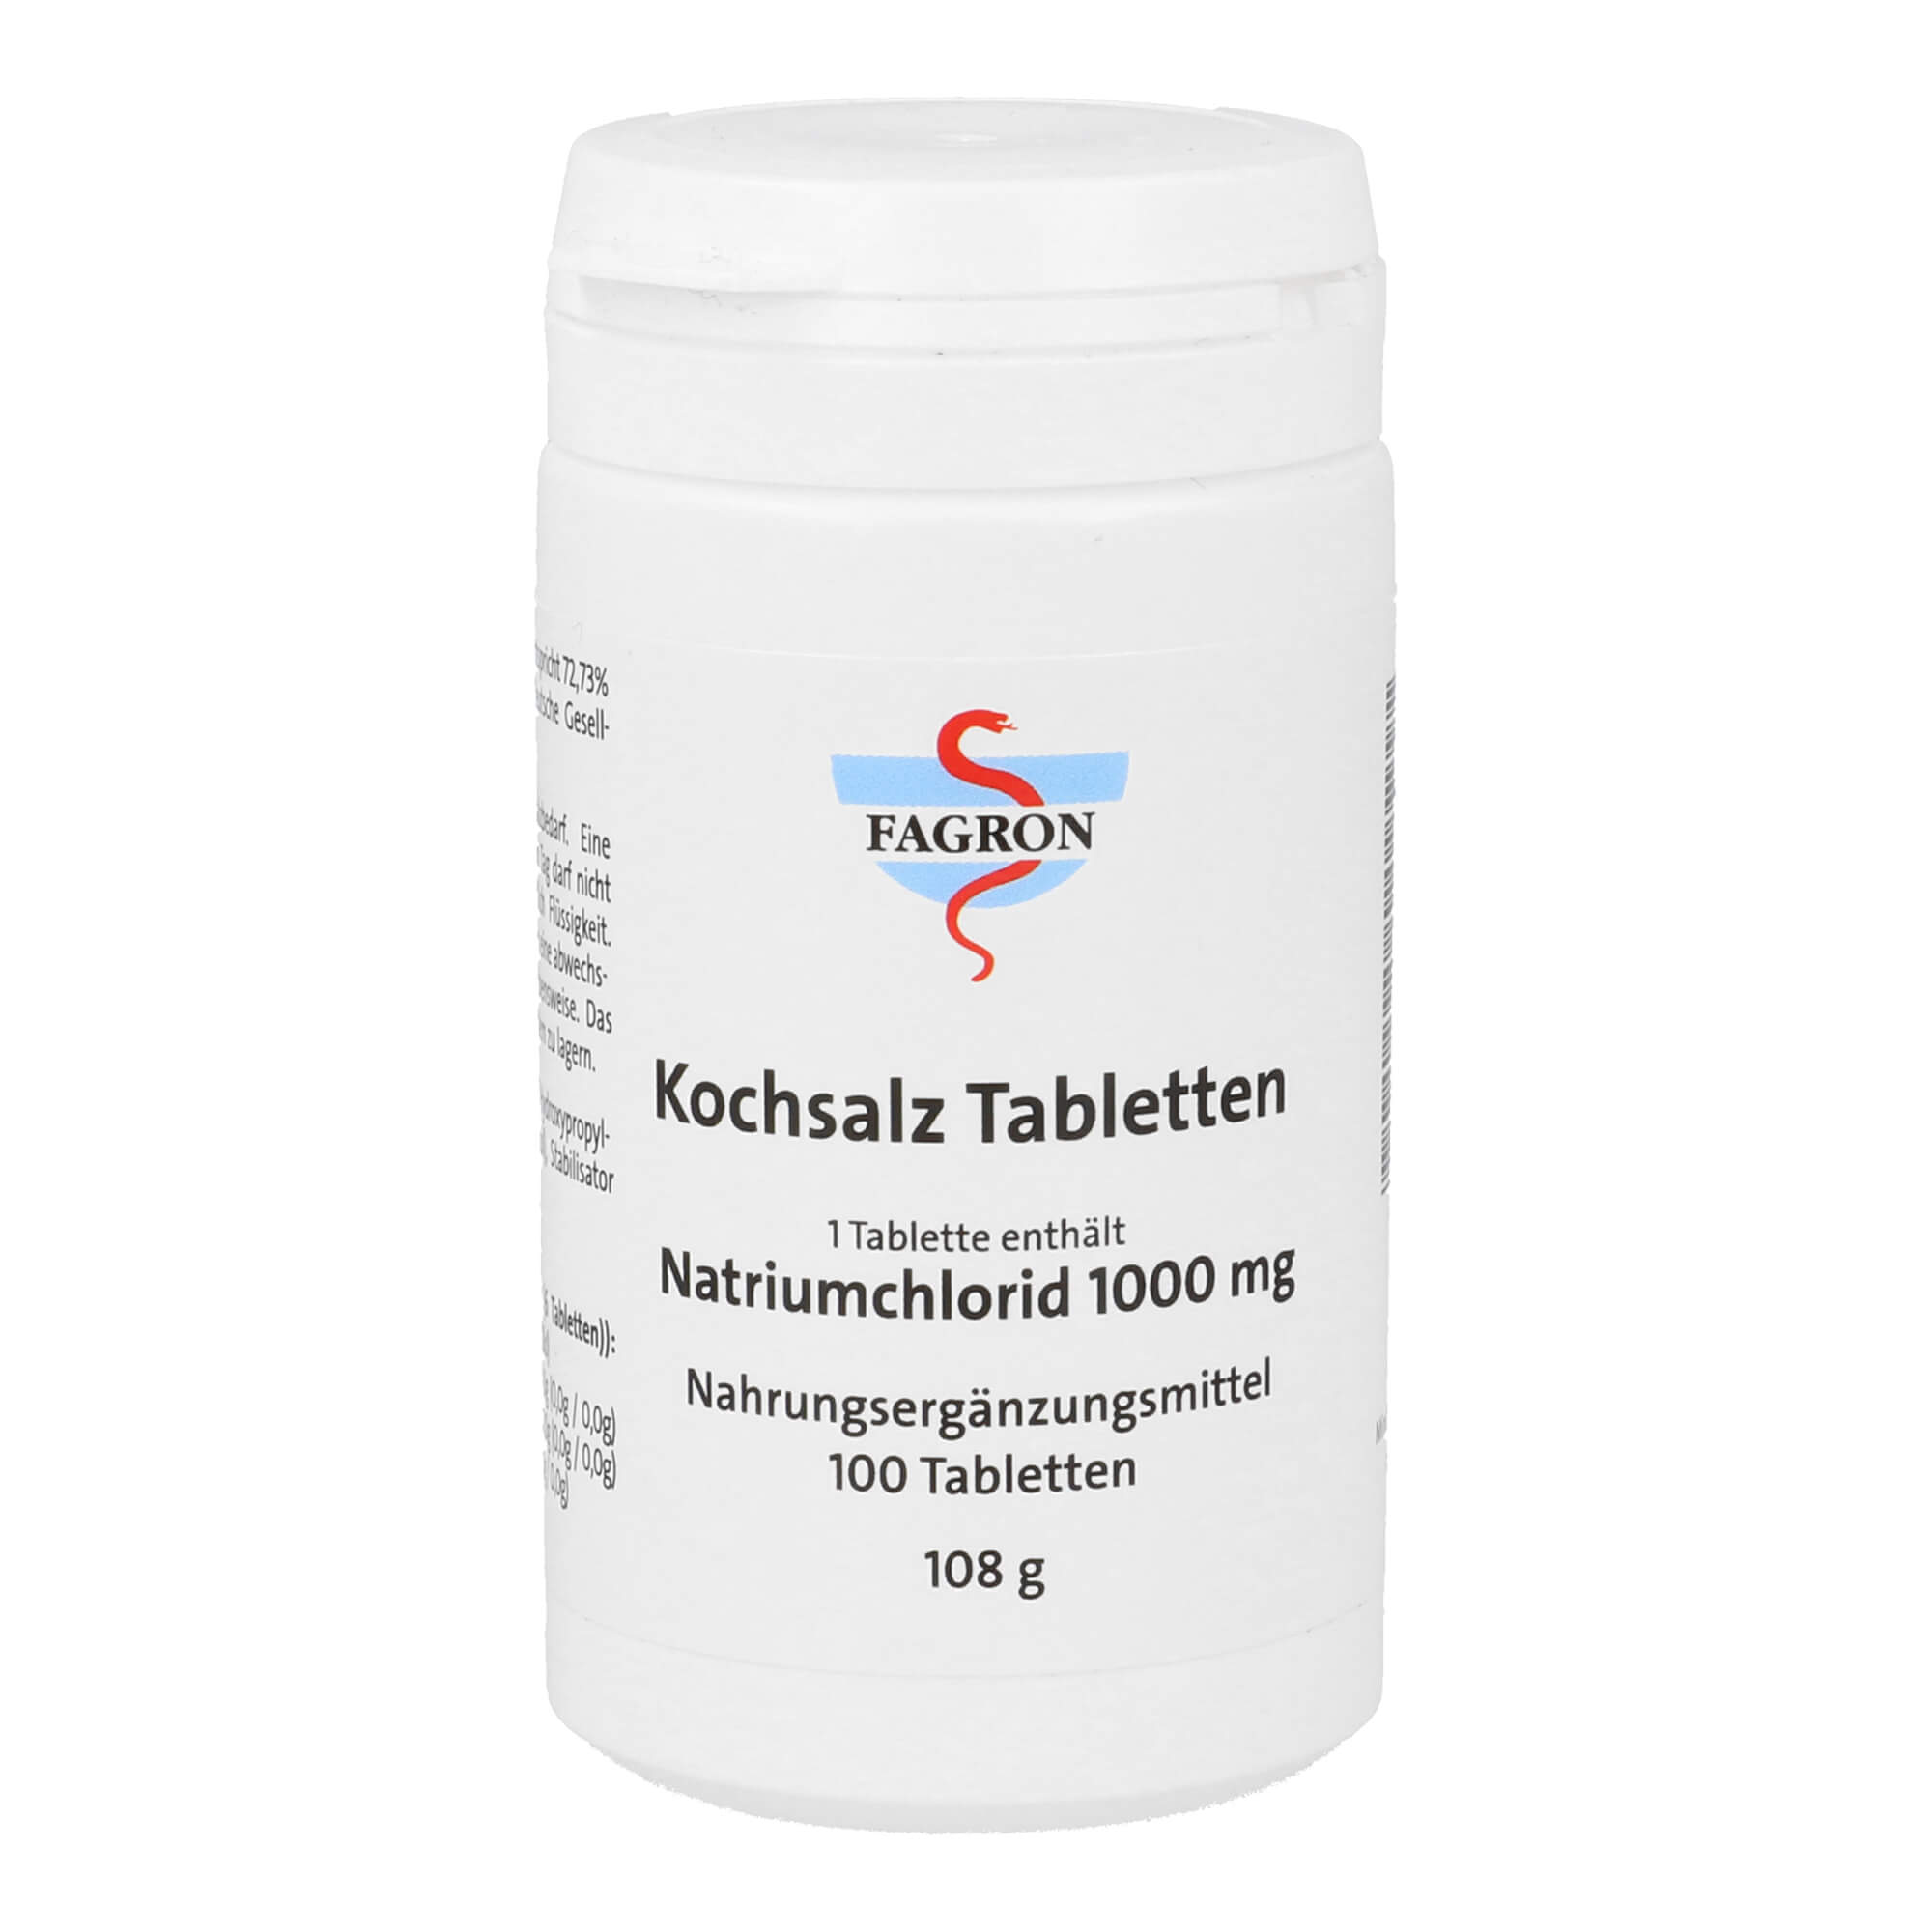 Nahrungsergänzungsmittel mit 1000 mg Natriumchlorid pro Tablette.